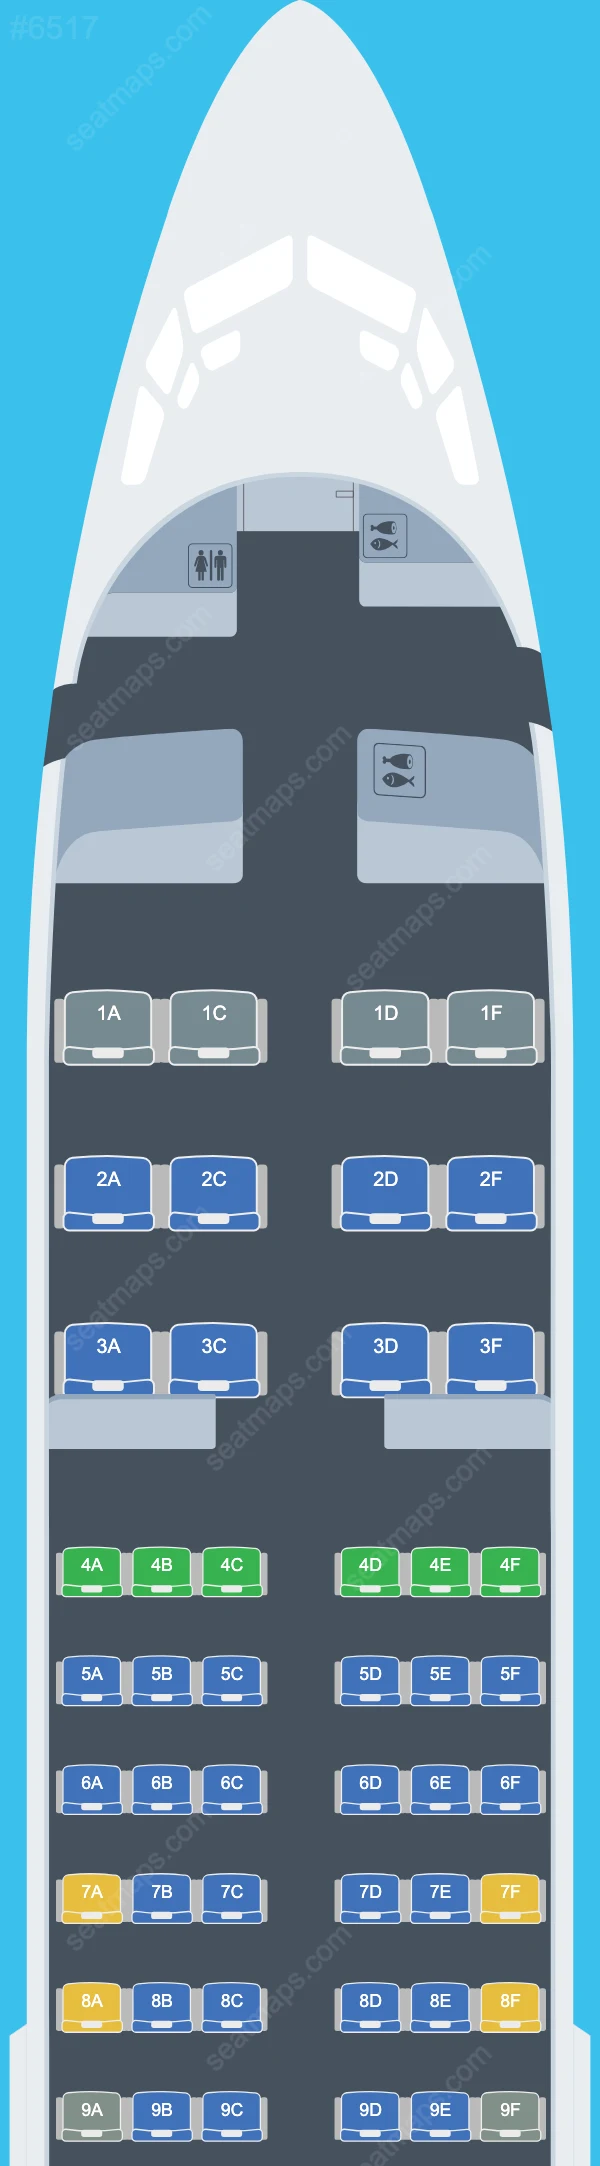 iAero Airways Boeing 737 Seat Maps 737-400 V.3